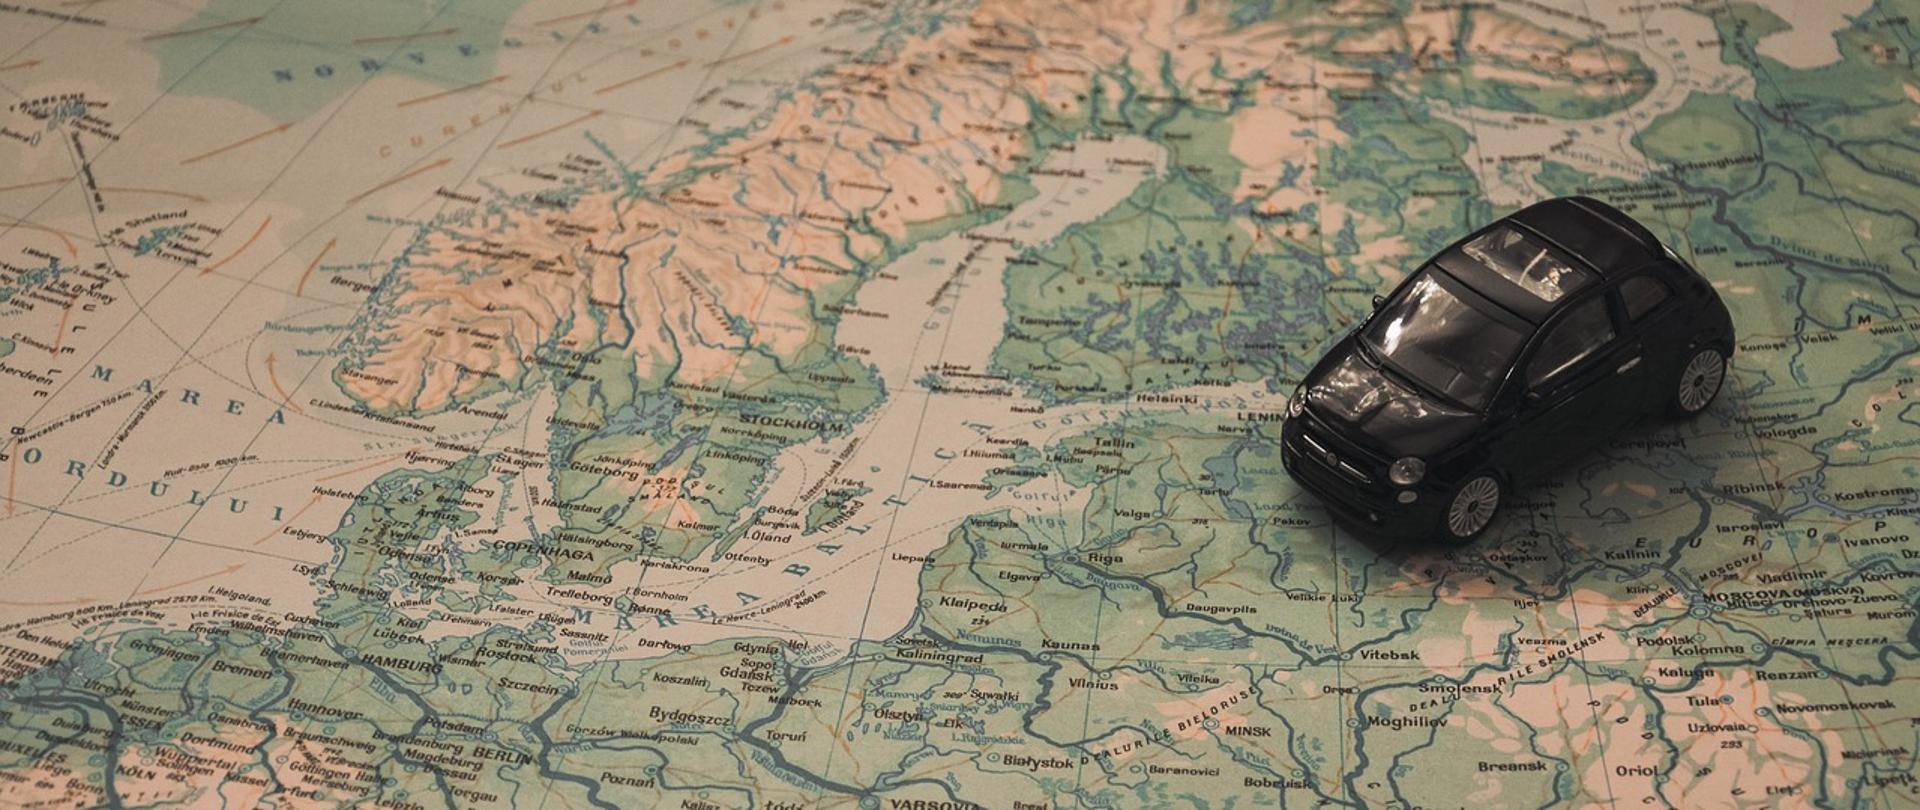 Mały czarny samochód na mapie Europy